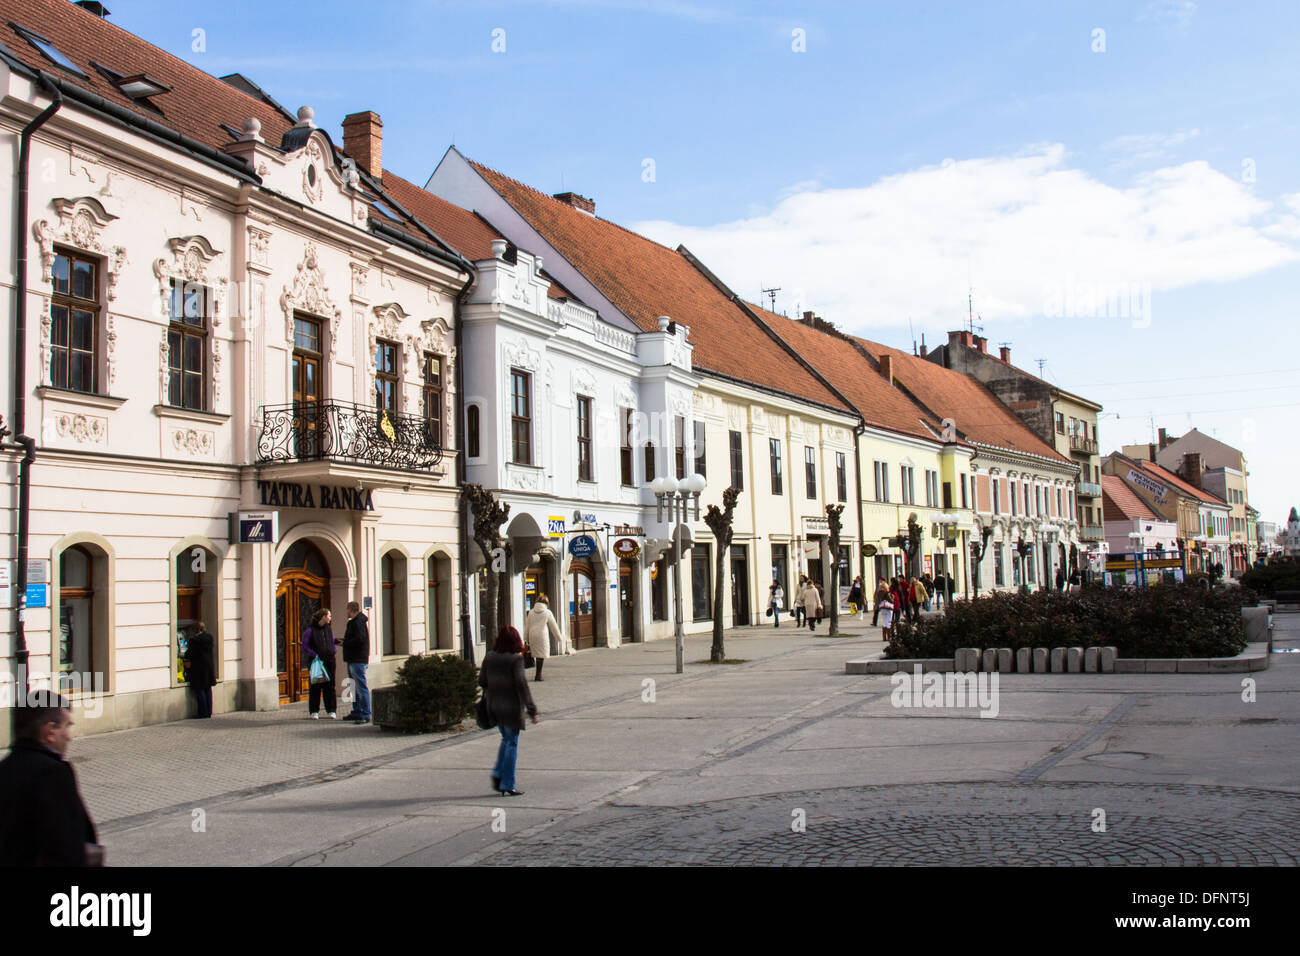 Shopping street in Trnava, Slovakai Stock Photo